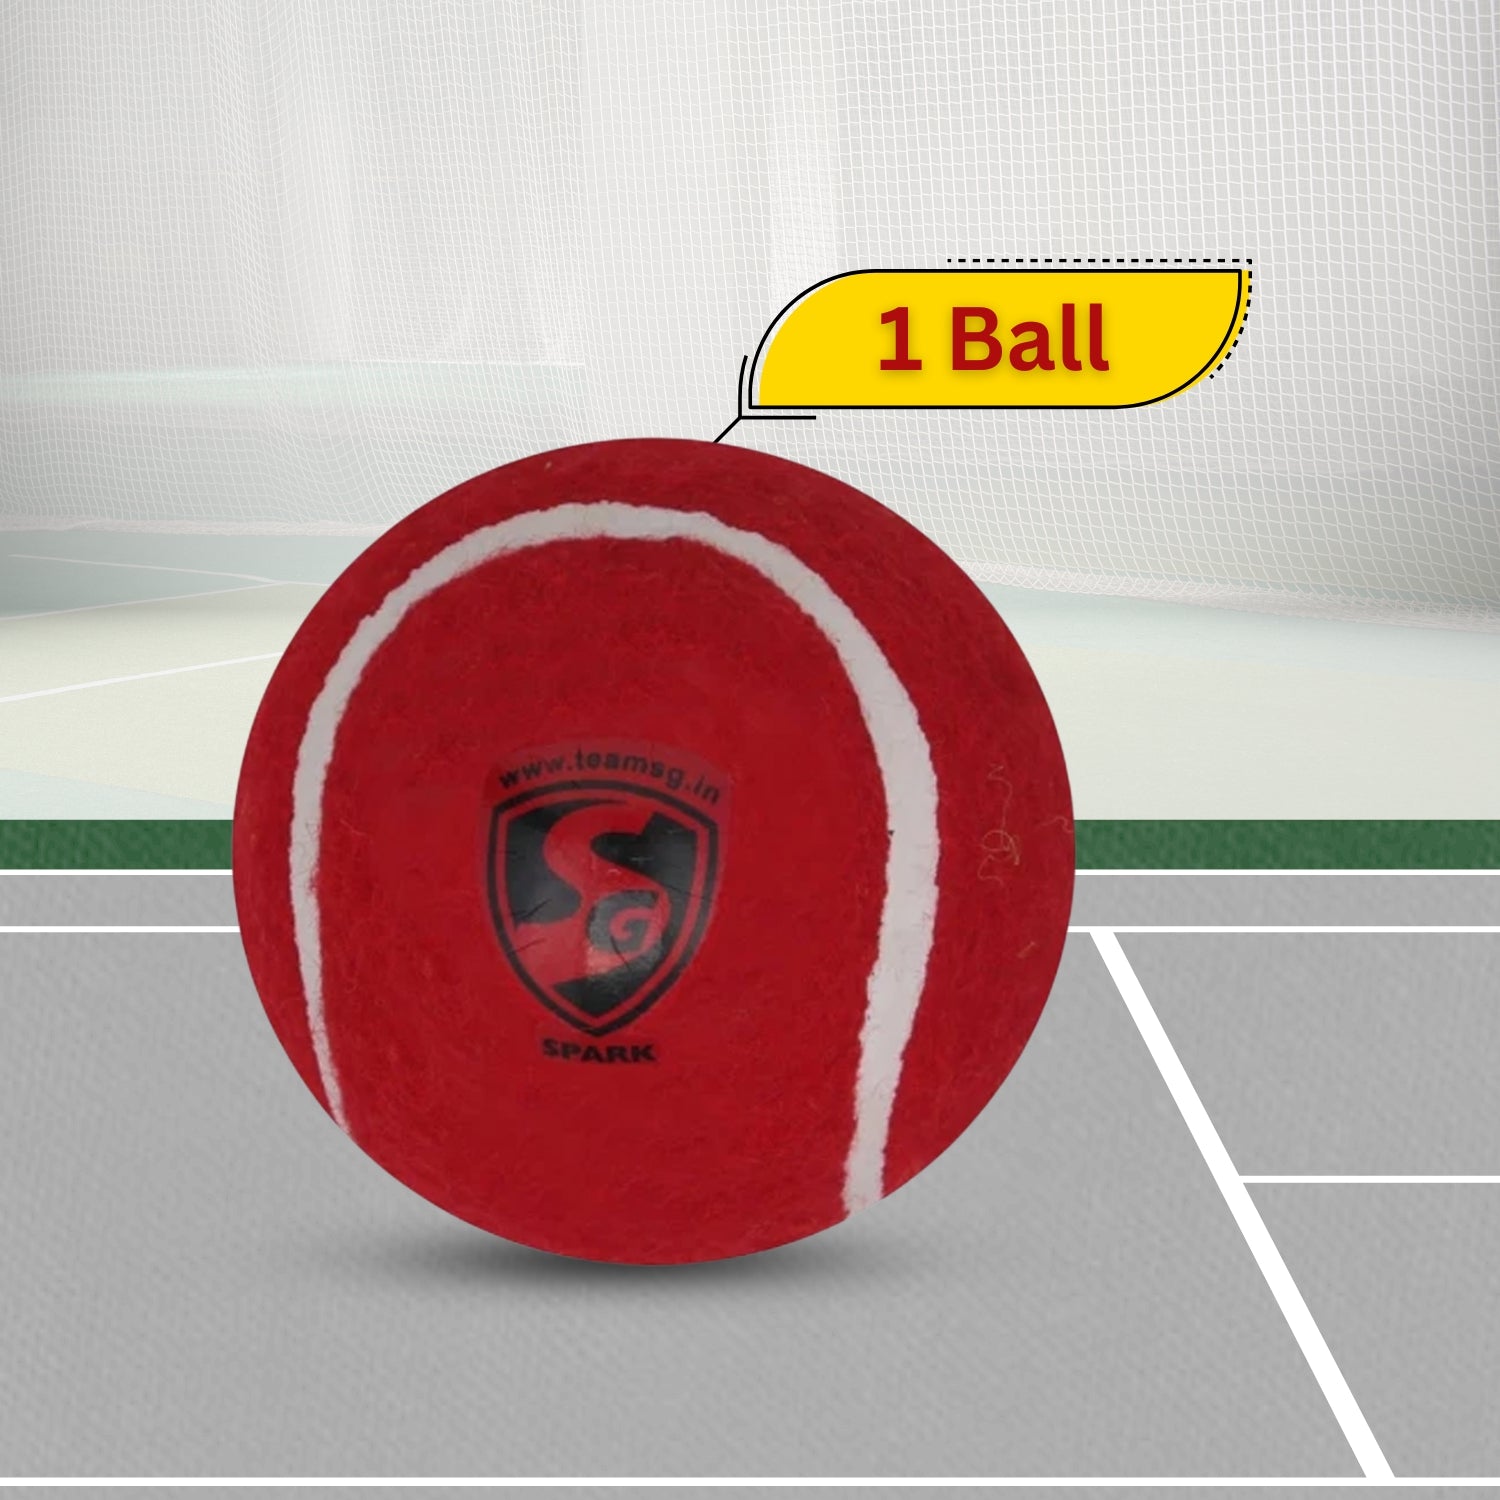 SG Spark Heavy Weight Cricket Tennis Ball, 1Pc - Red - Best Price online Prokicksports.com